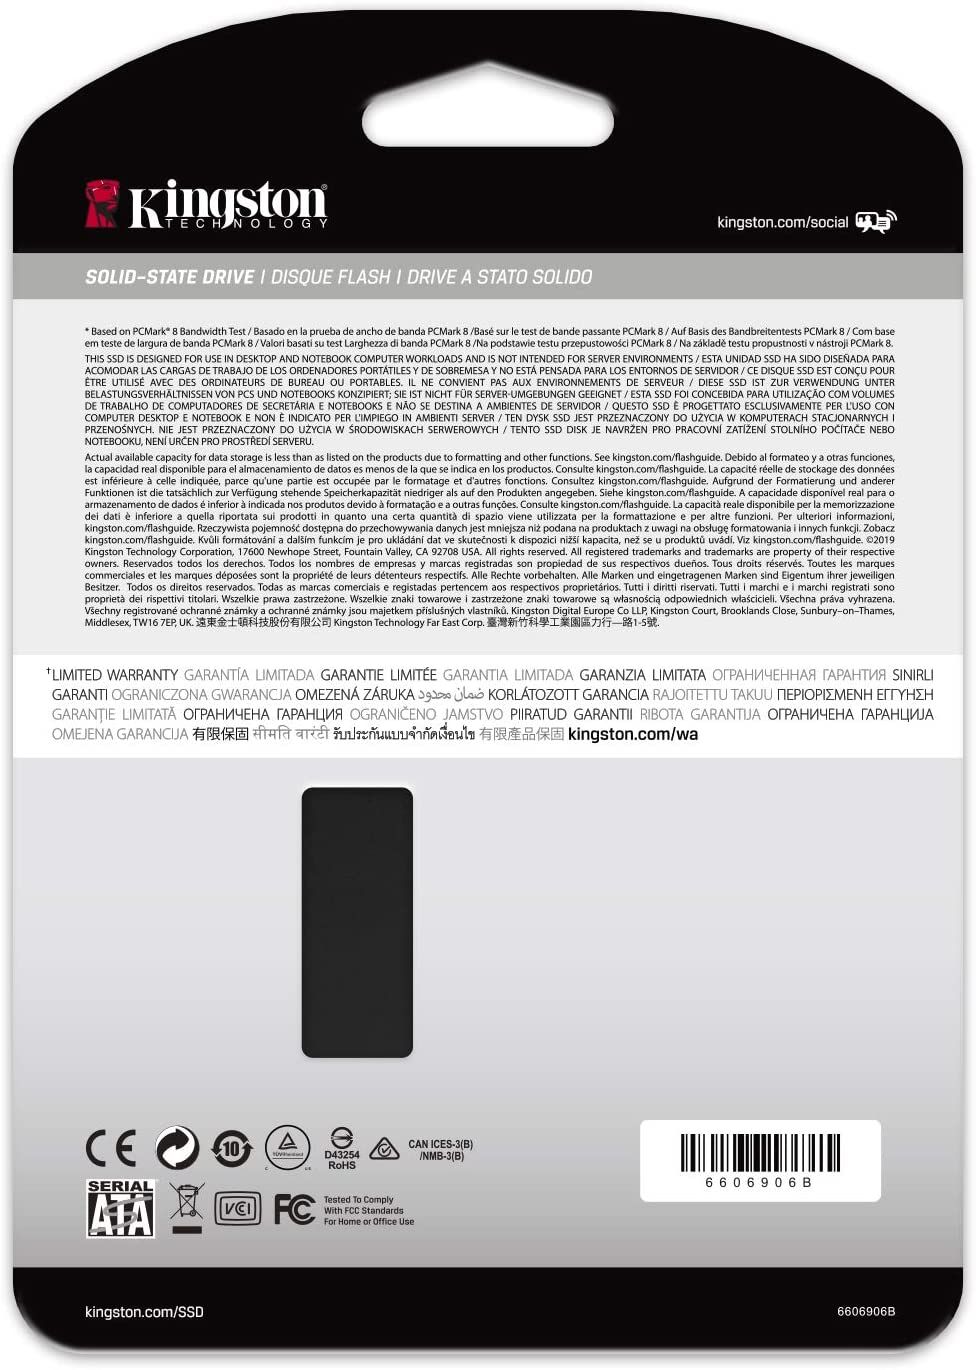 Kingston Disque Dur SSD M. 2280 NVMe 500GB 2 M2 Multicolore